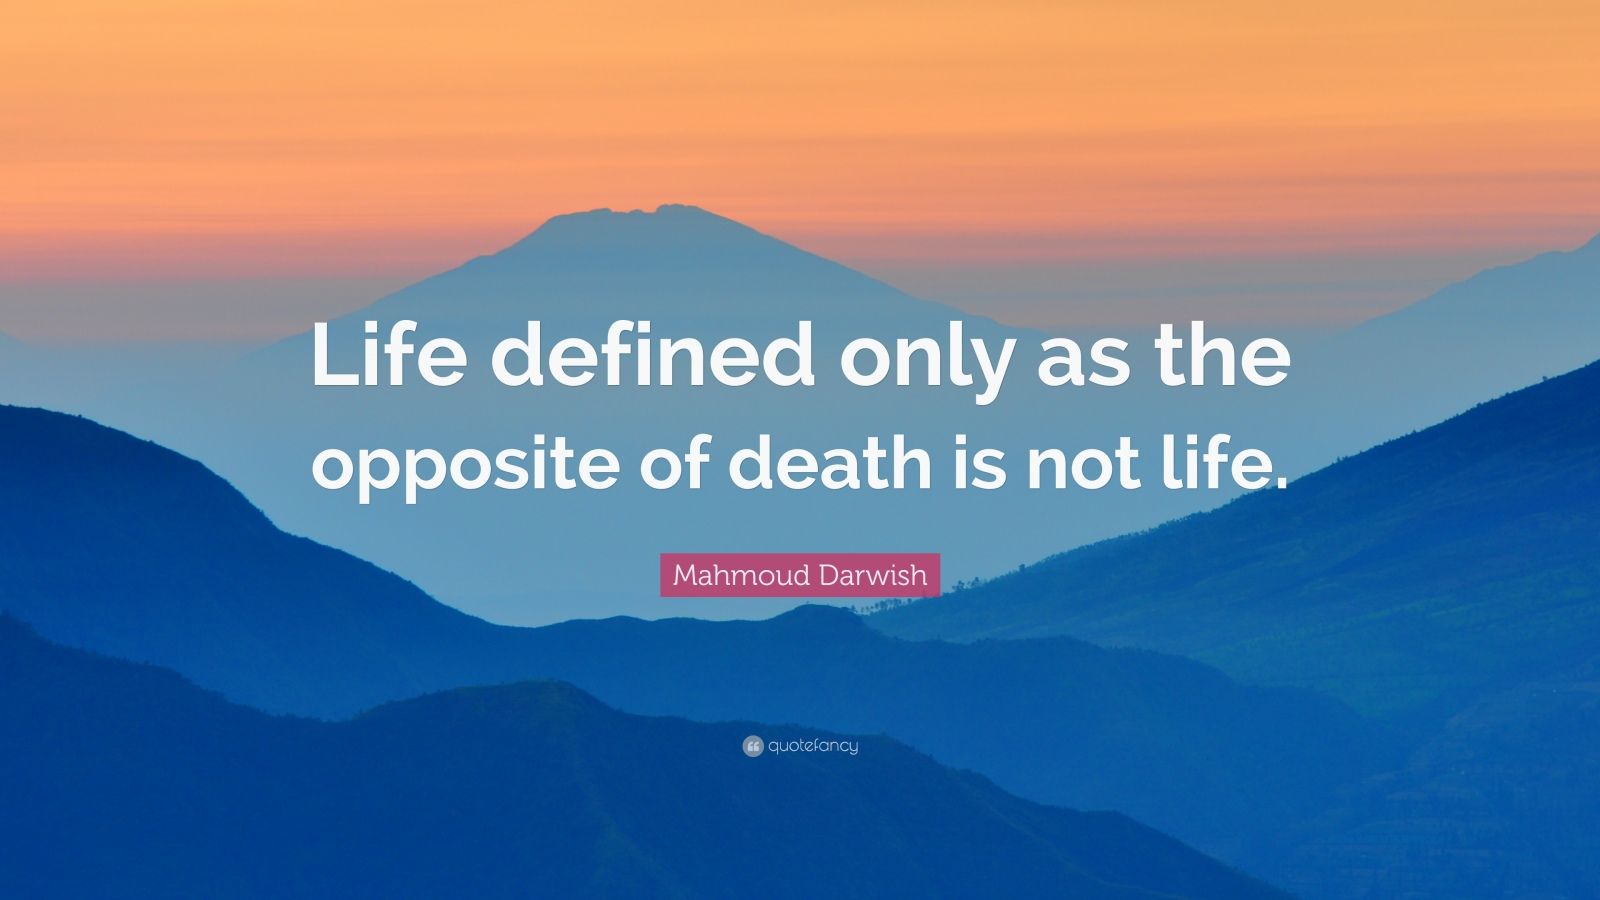 Mahmoud Darwish Quotes (51 wallpapers) - Quotefancy